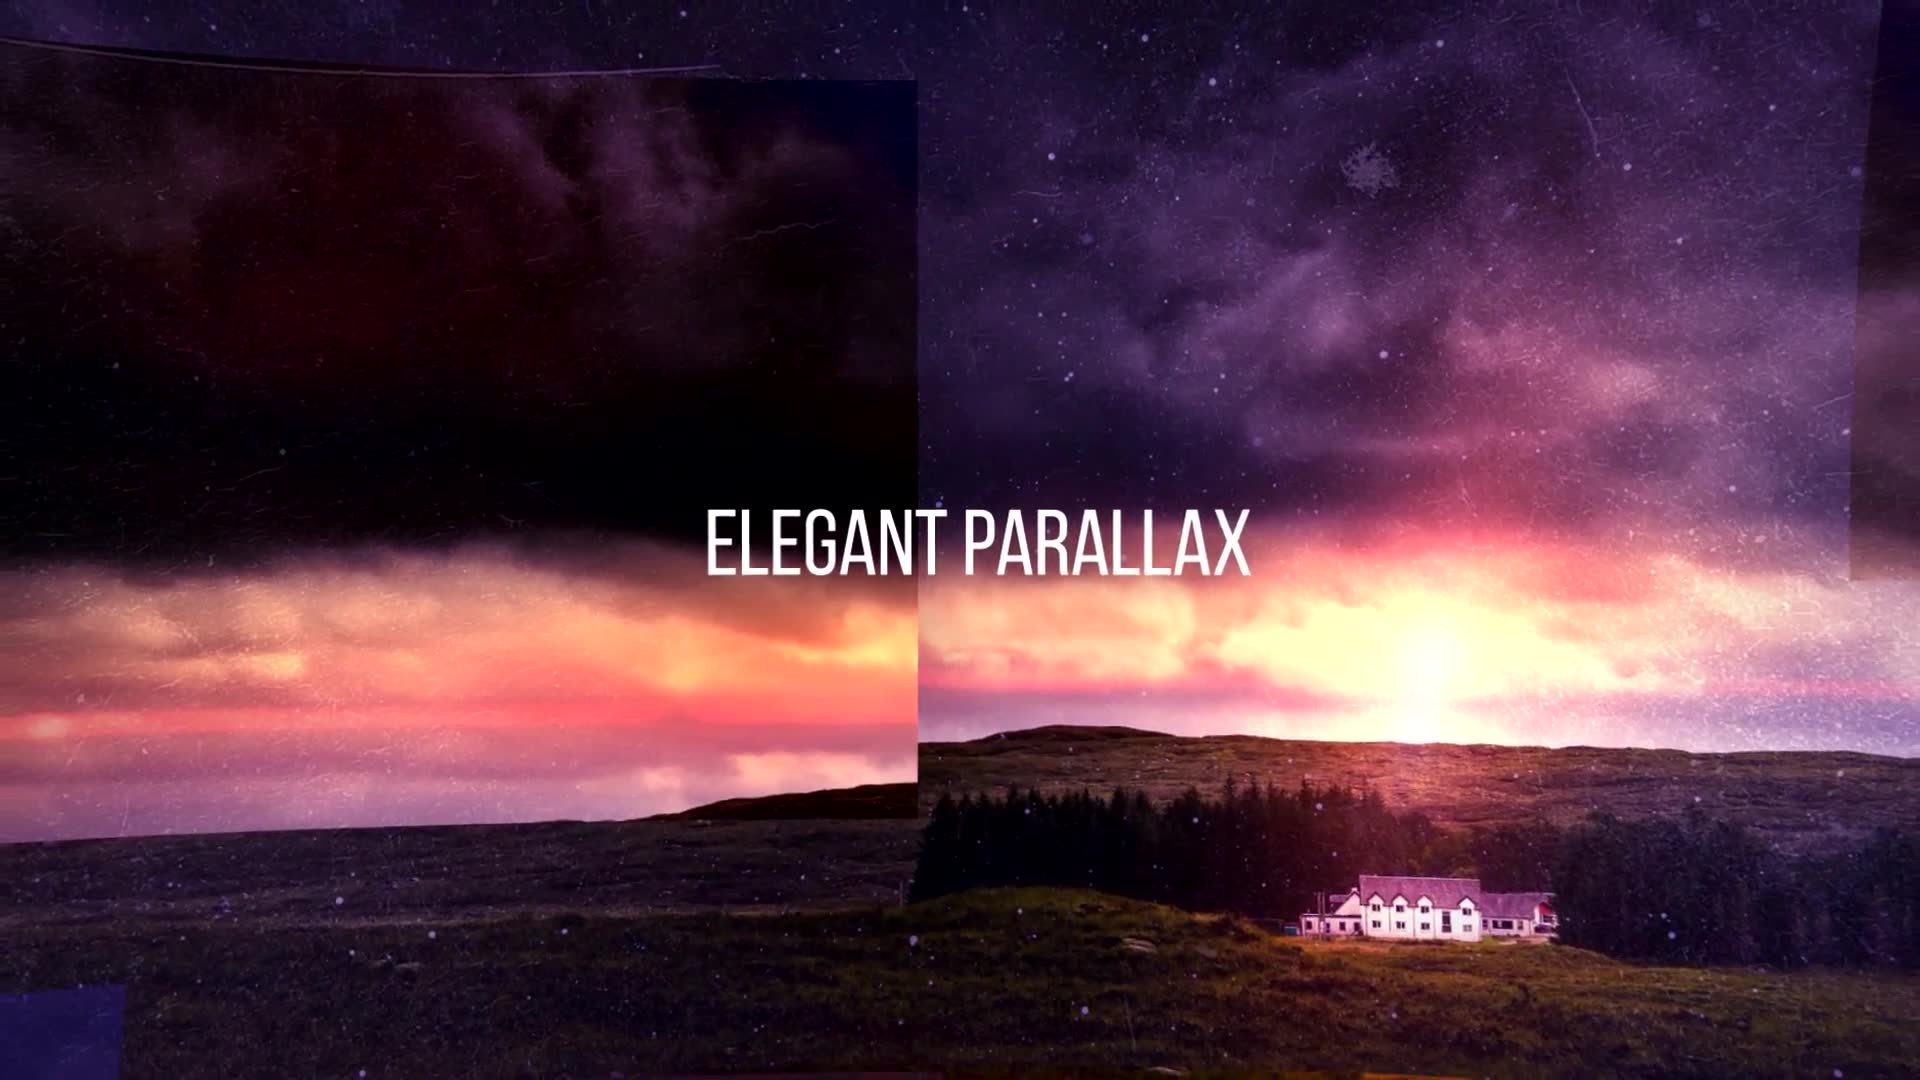 Elegant Parallax Opener - Download Videohive 17963266